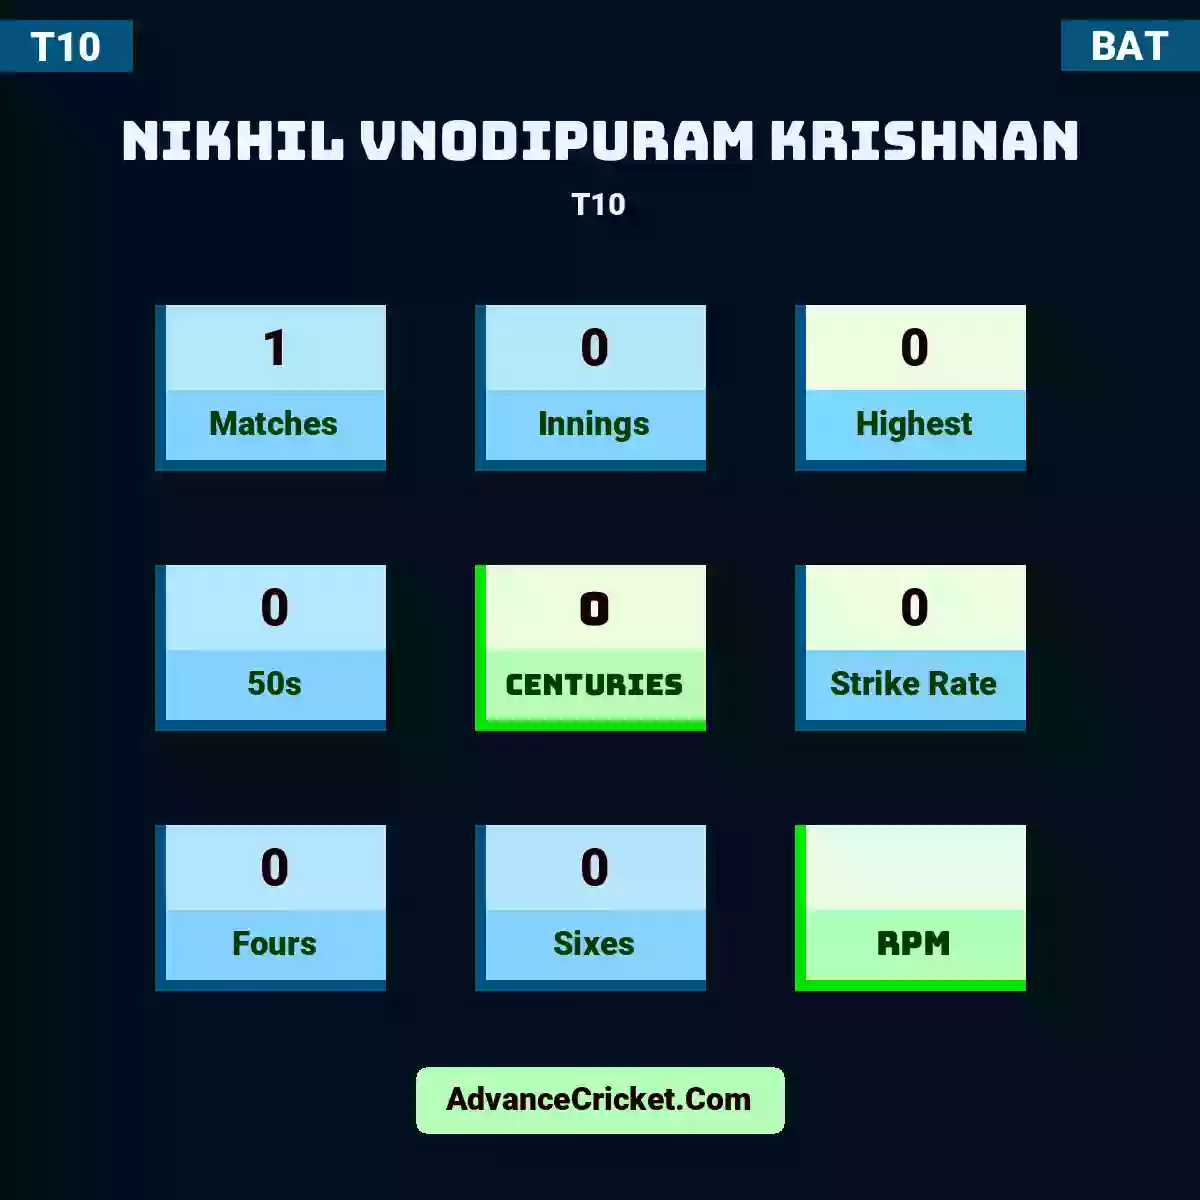 Nikhil Vnodipuram Krishnan T10 , Nikhil Vnodipuram Krishnan played 1 matches, scored 0 runs as highest, 0 half-centuries, and 0 centuries, with a strike rate of 0. N.Krishnan hit 0 fours and 0 sixes.